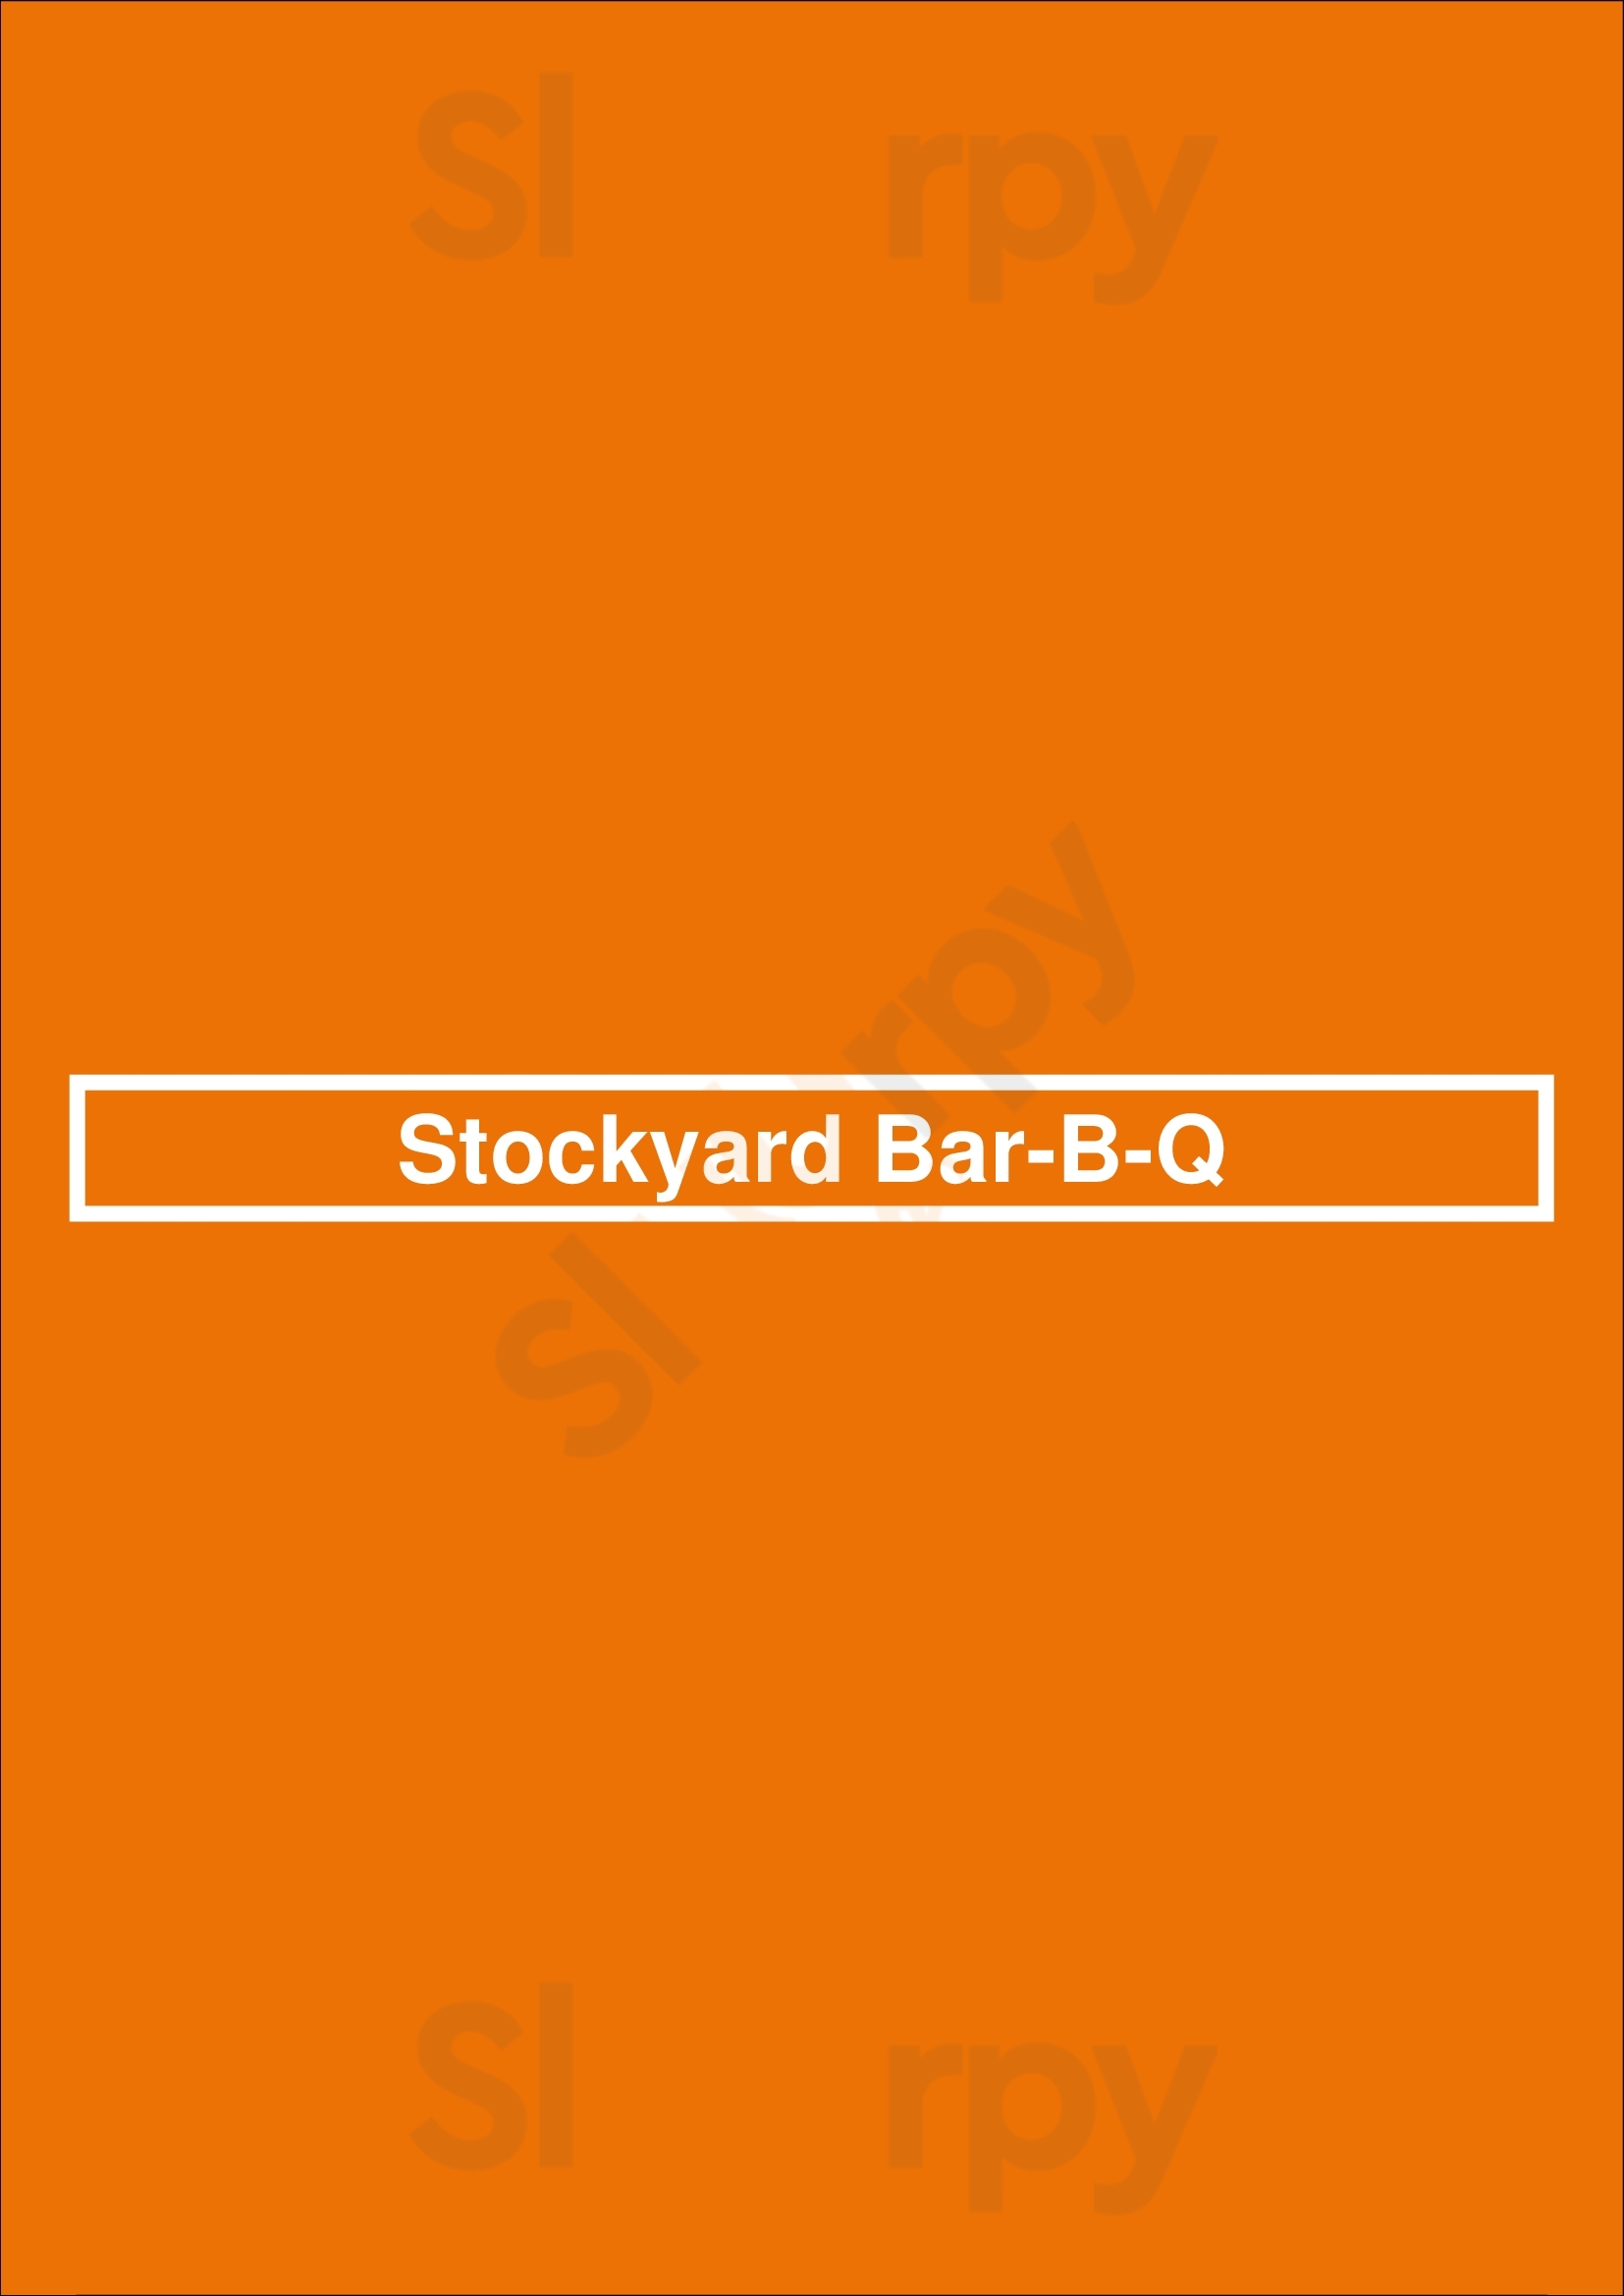 Stockyard Bar-b-q Houston Menu - 1